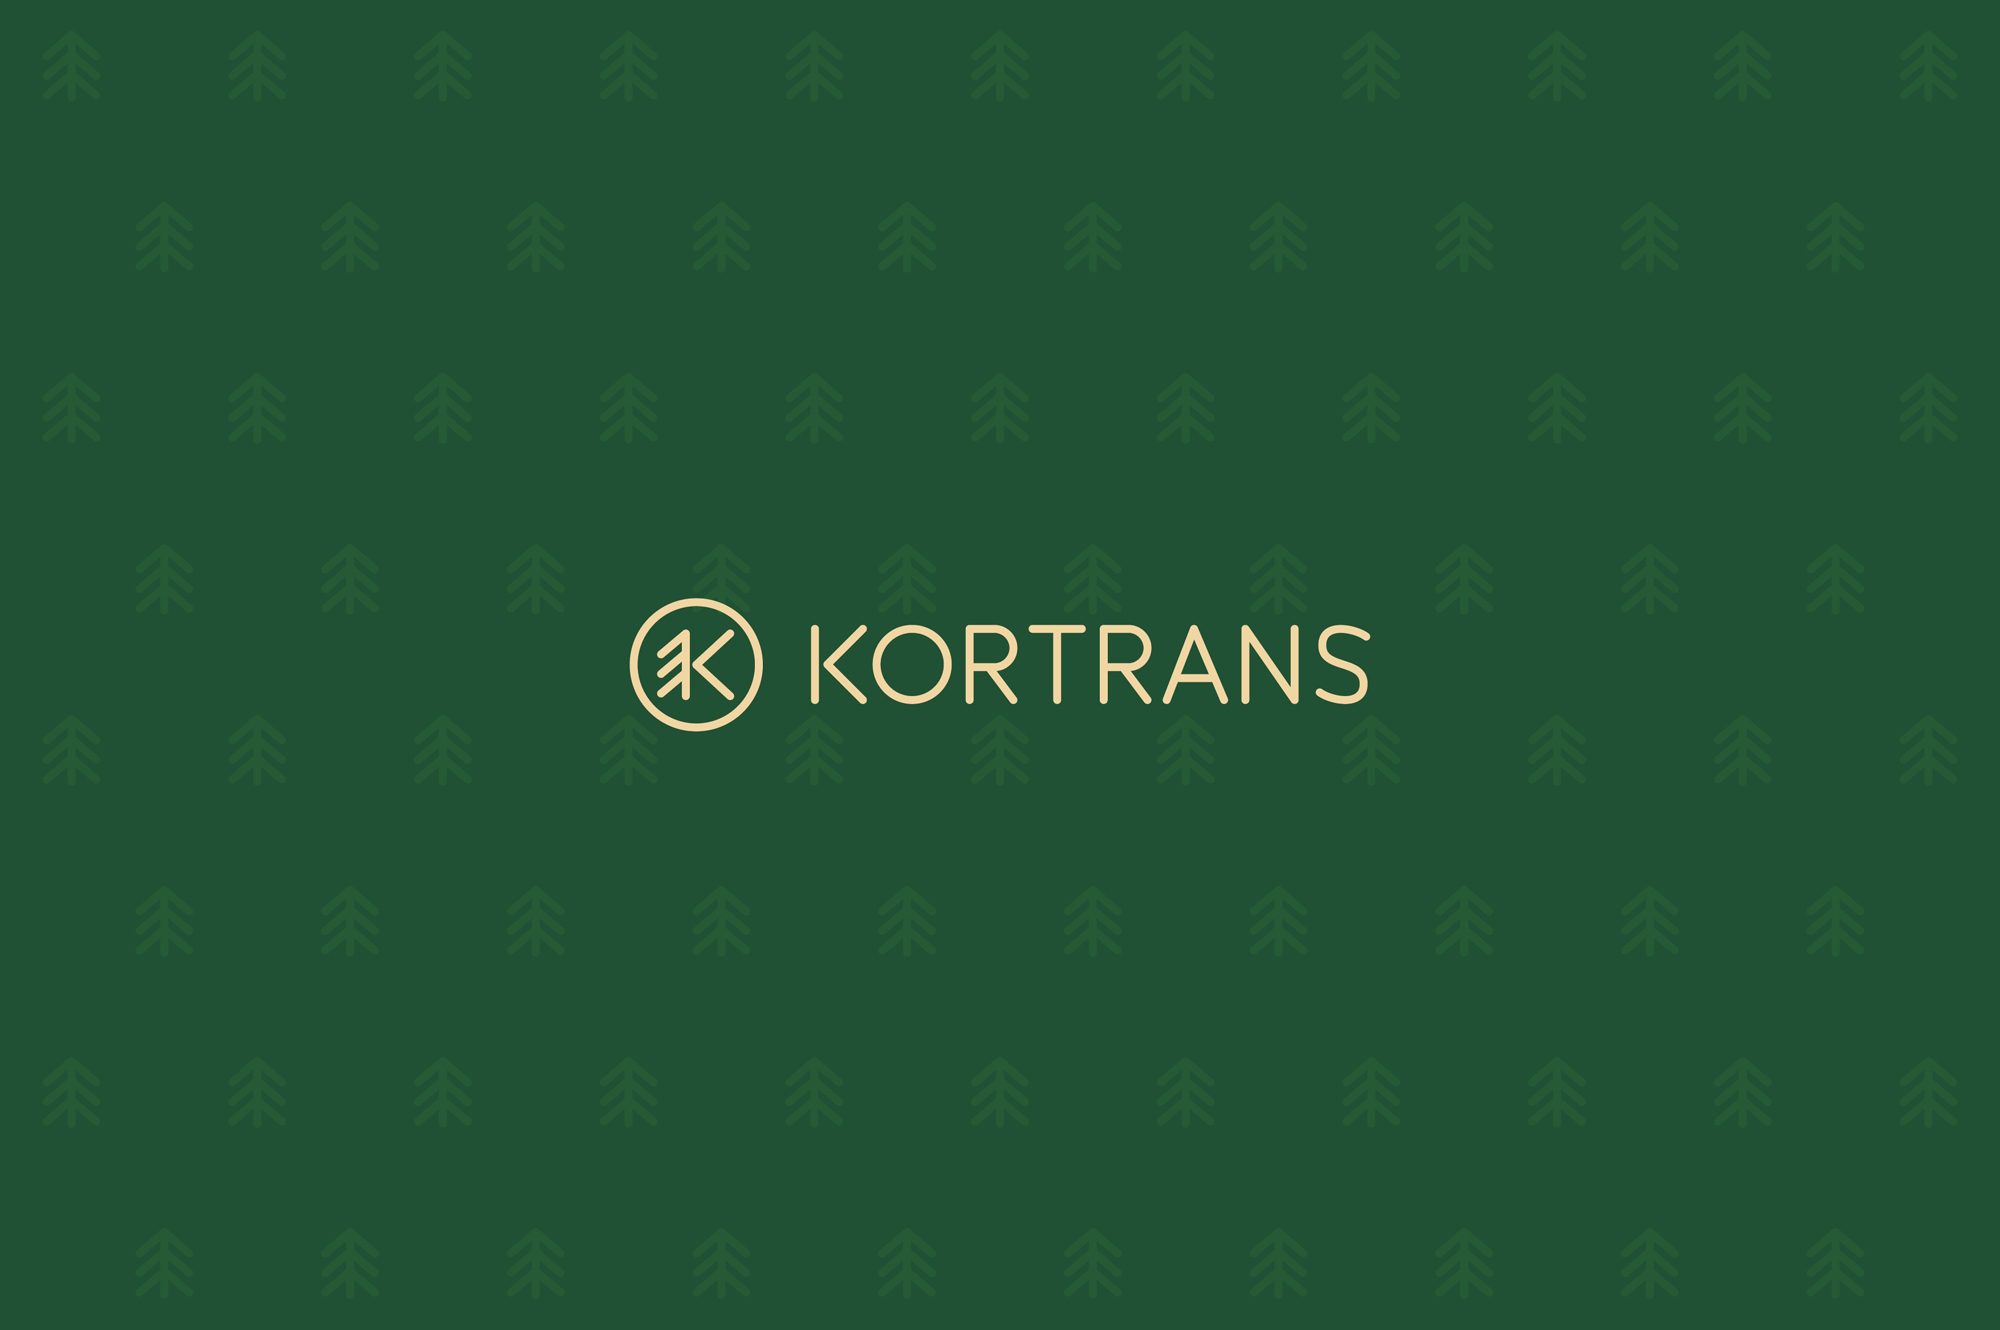 Kortrans - logo TŁO ID